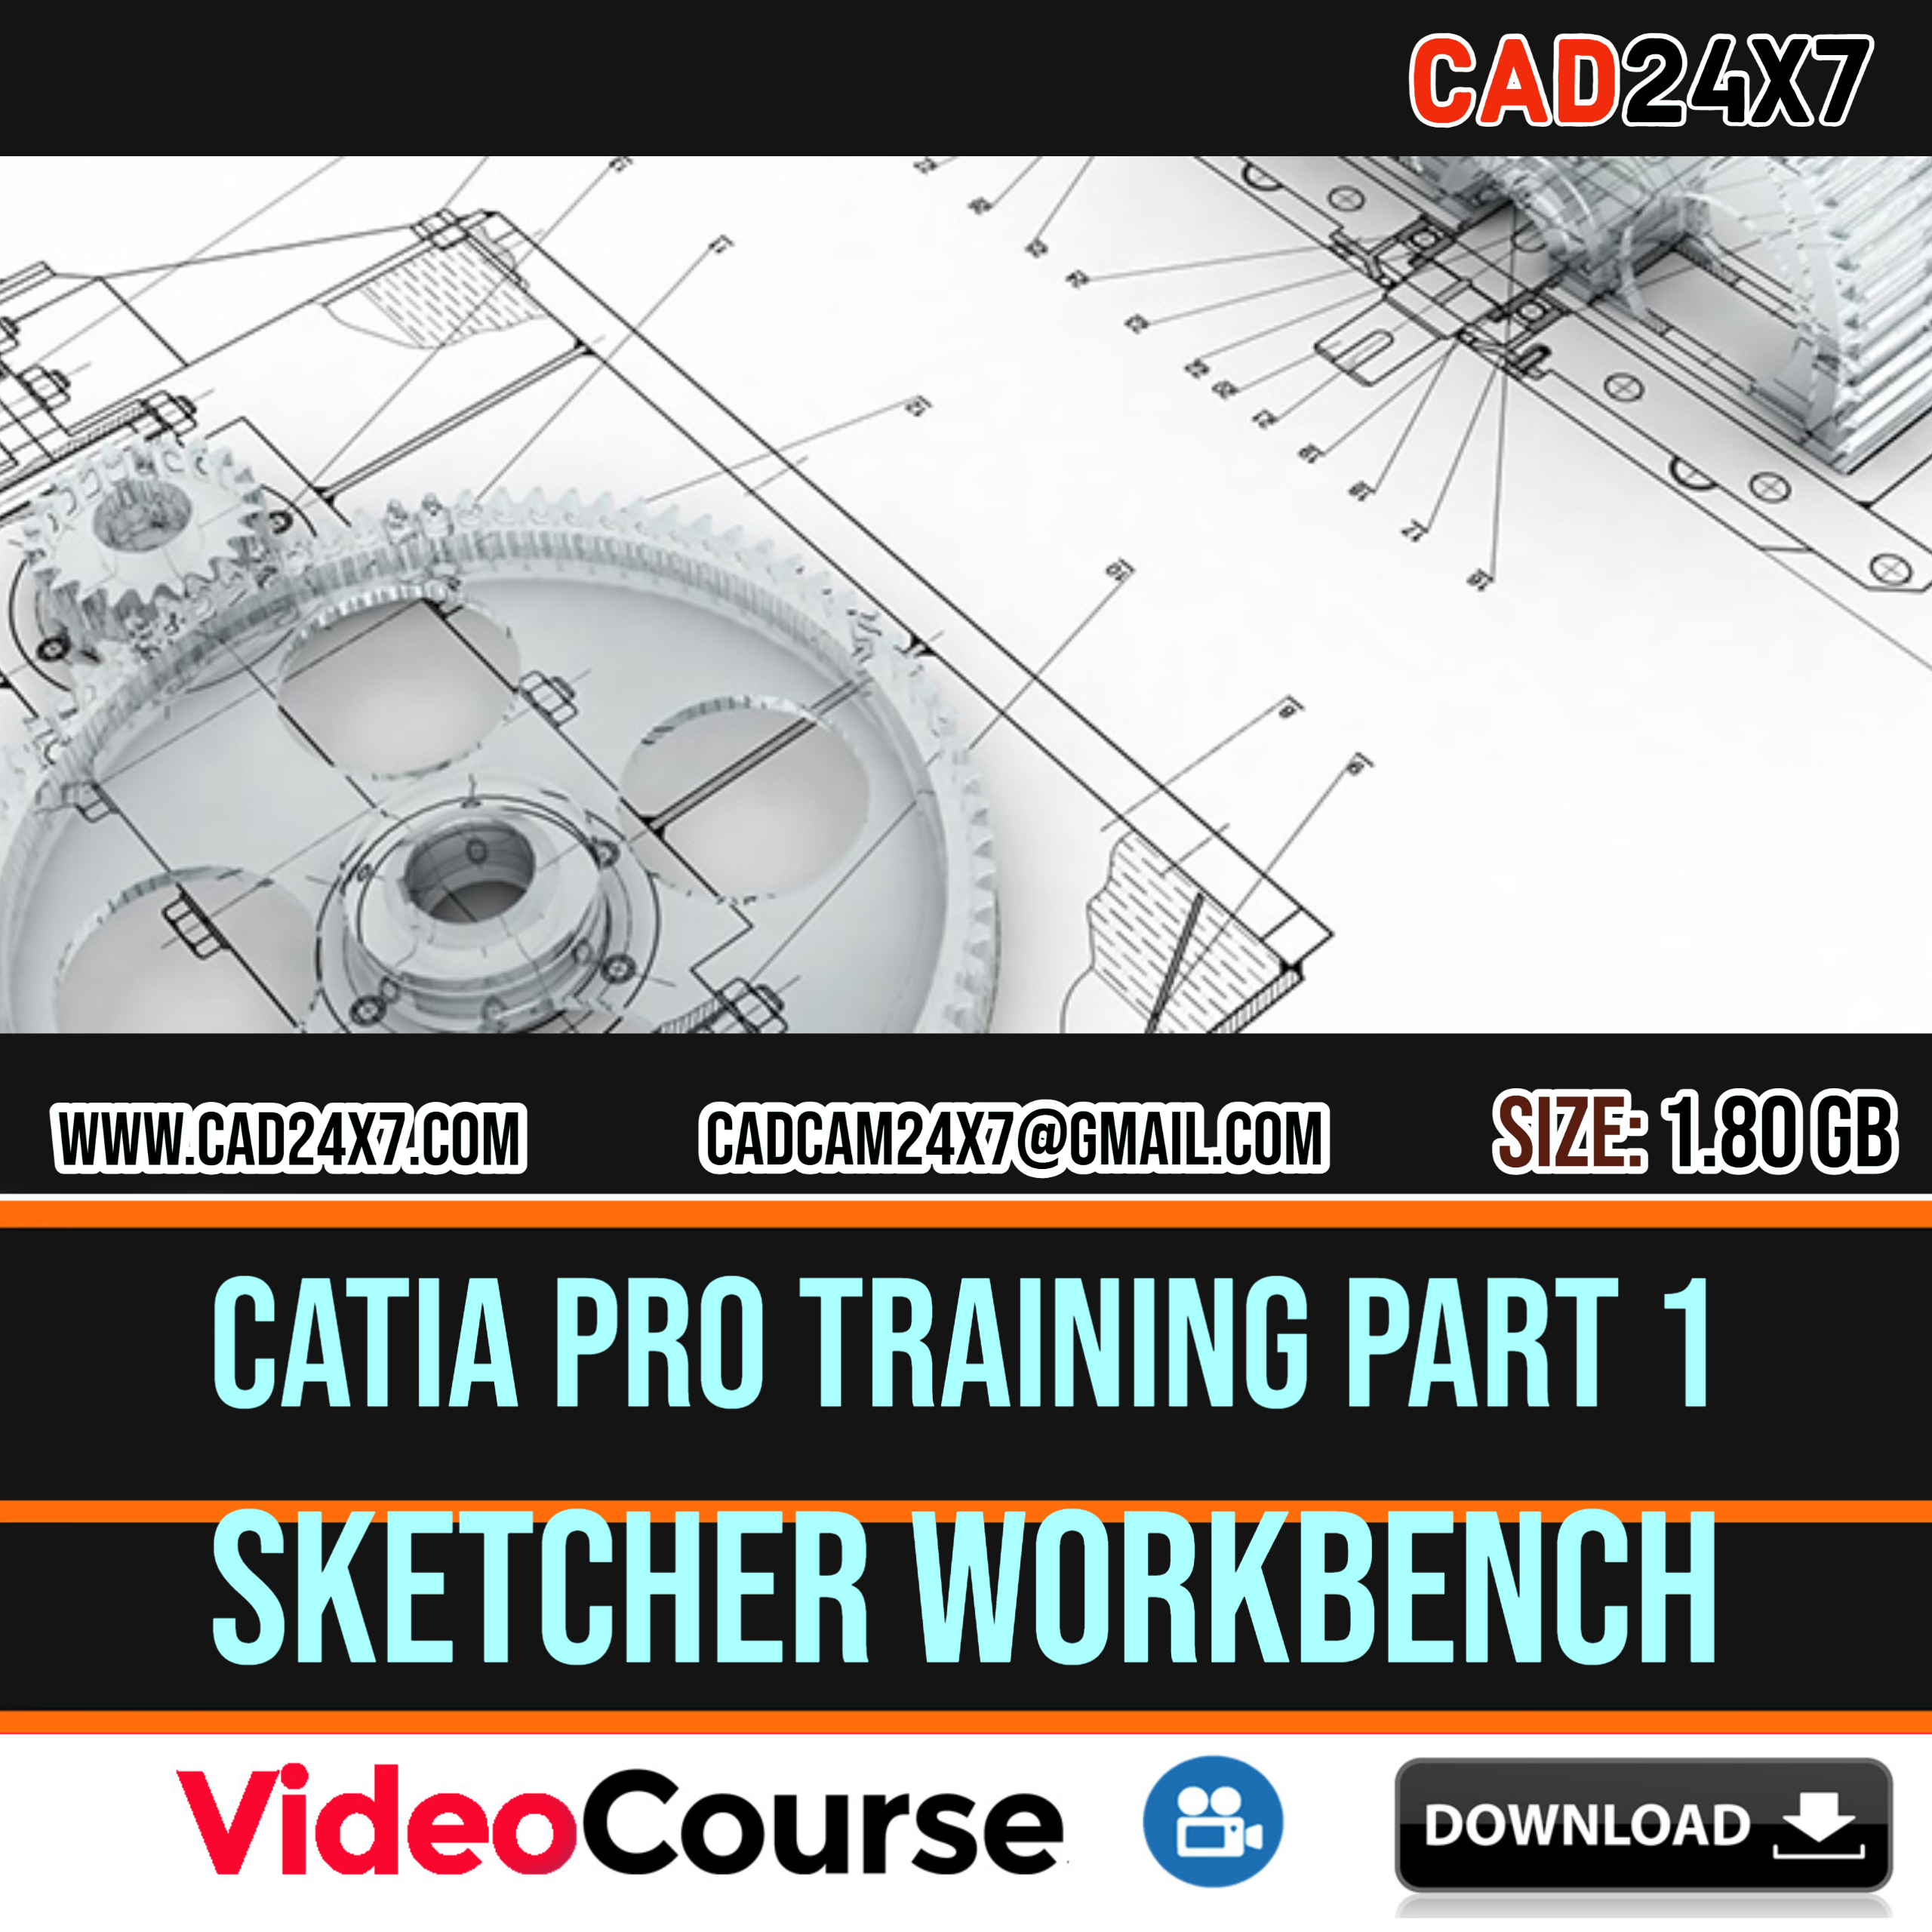 CATIA Pro Training Part 1 Sketcher Workbench